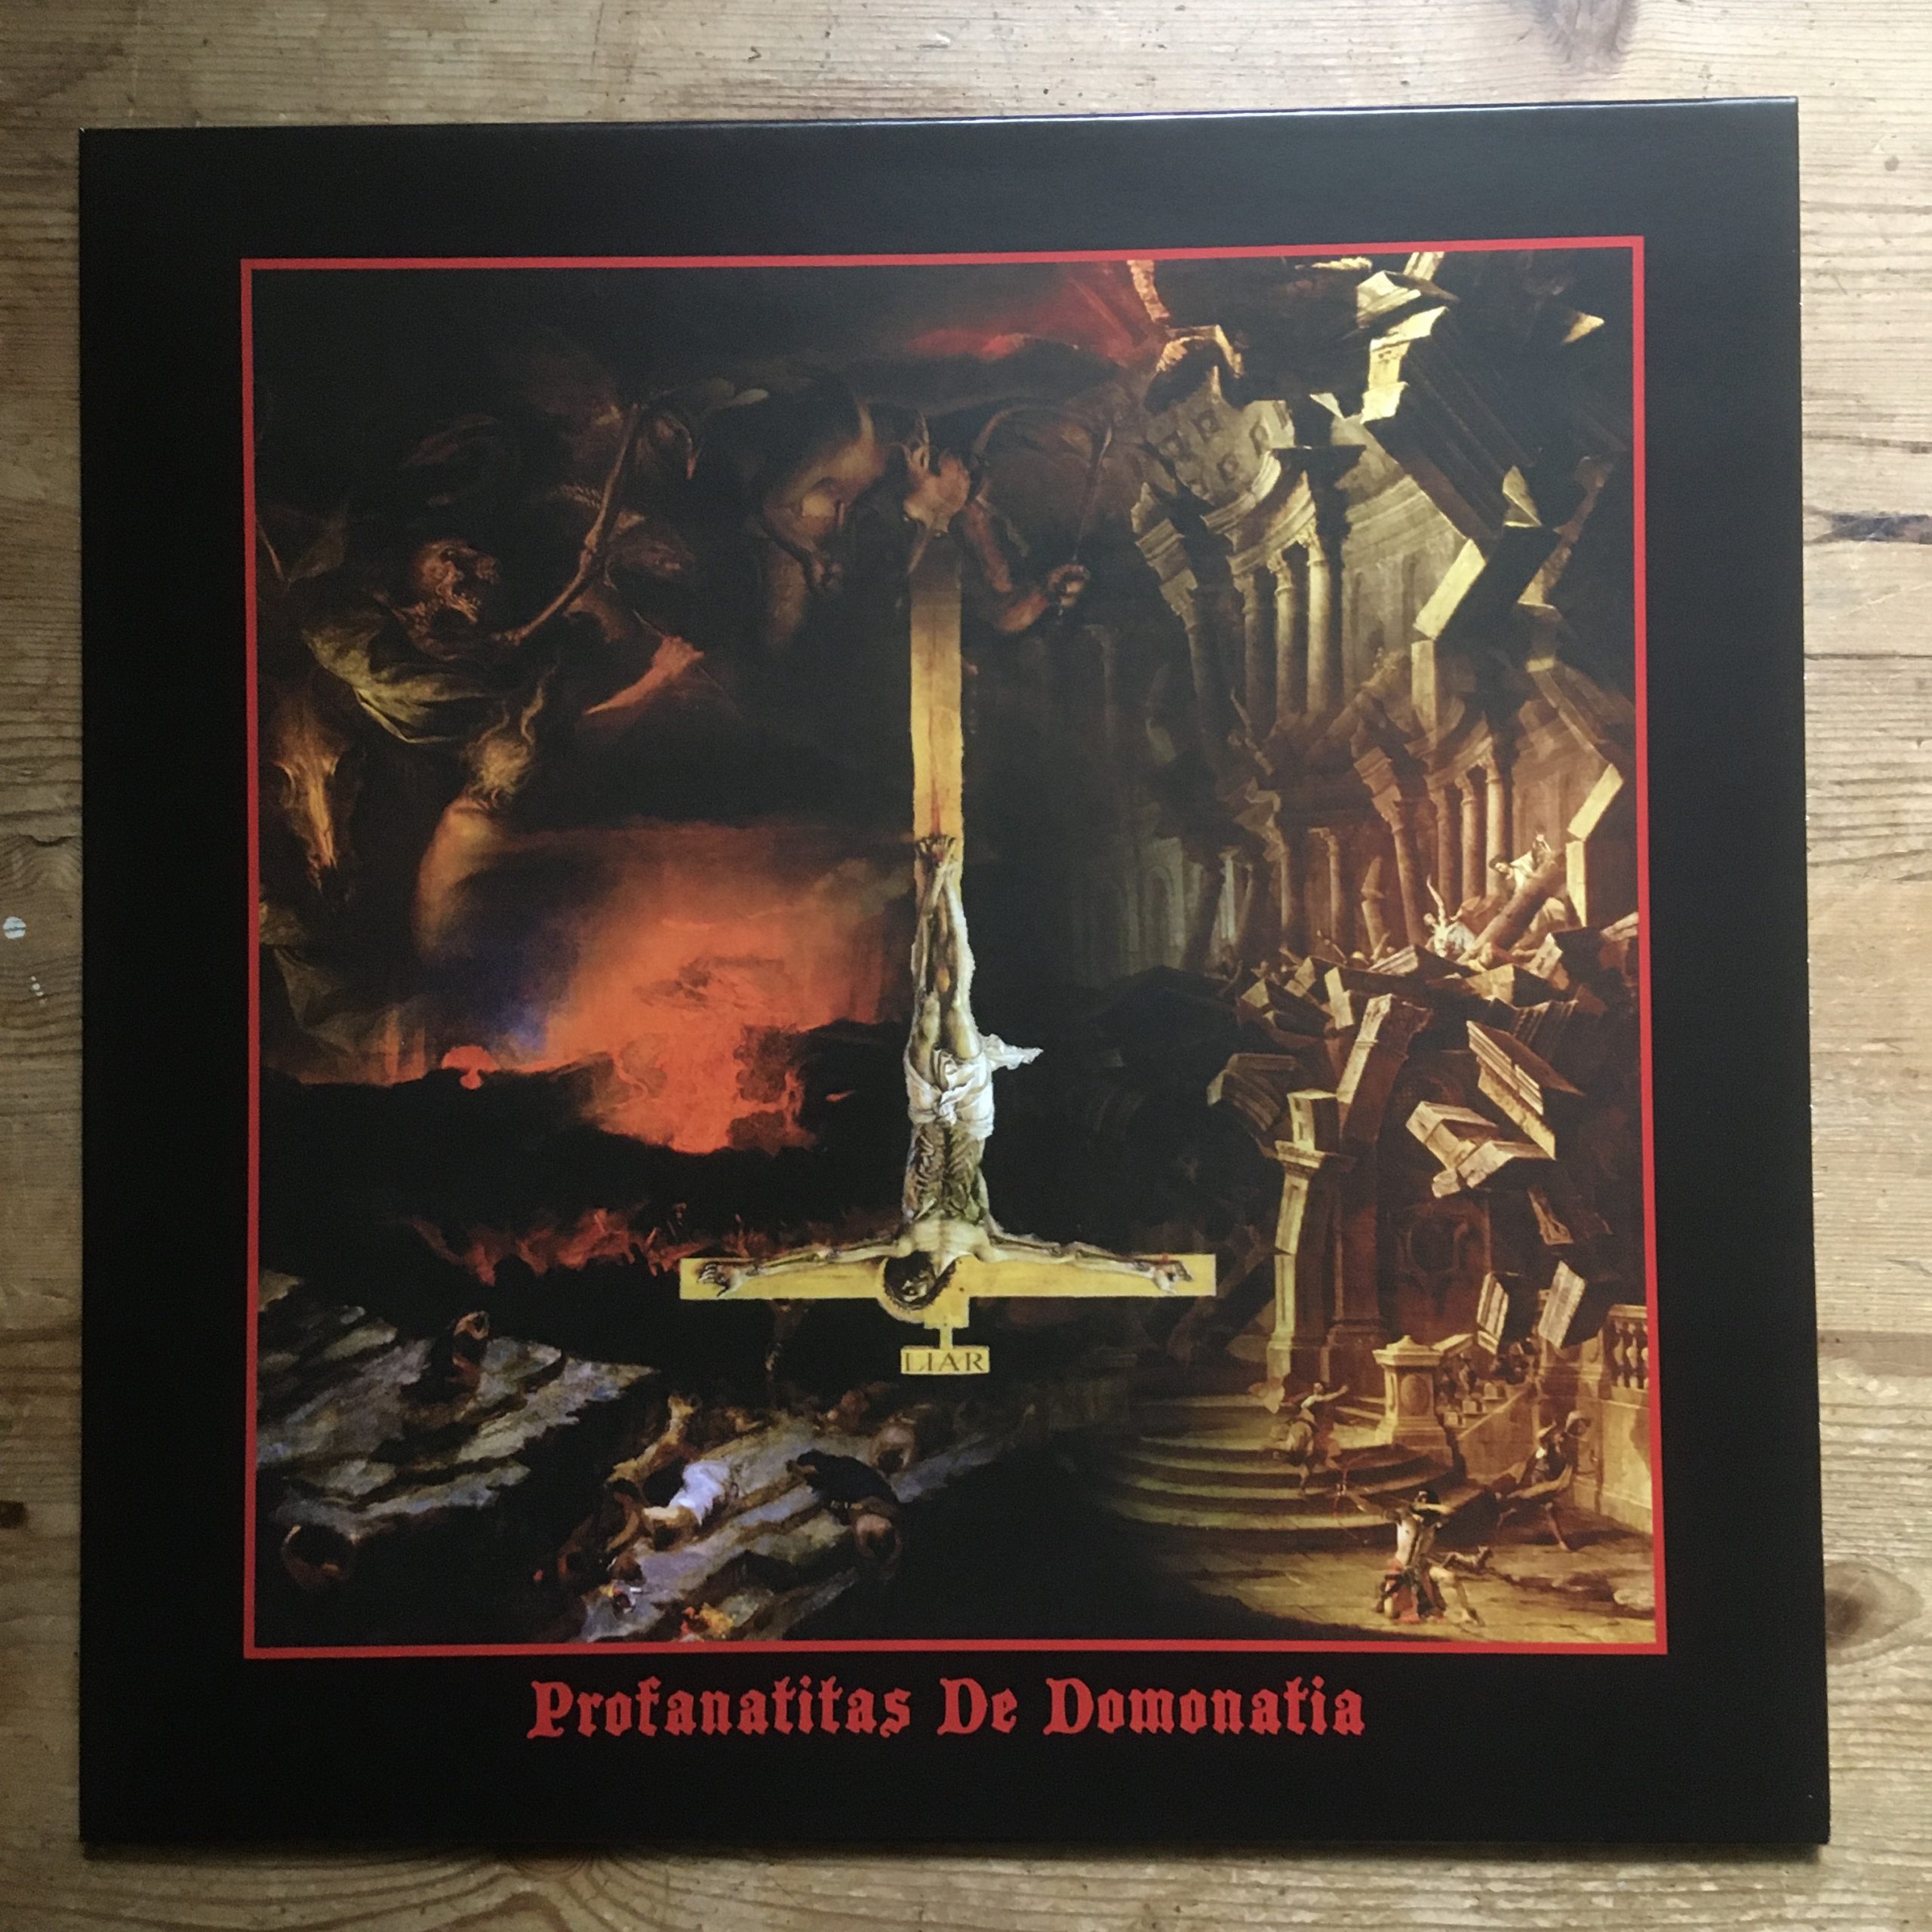 Photo of the Profanantica - "Profanatitas de Domonatia" LP (Black vinyl)